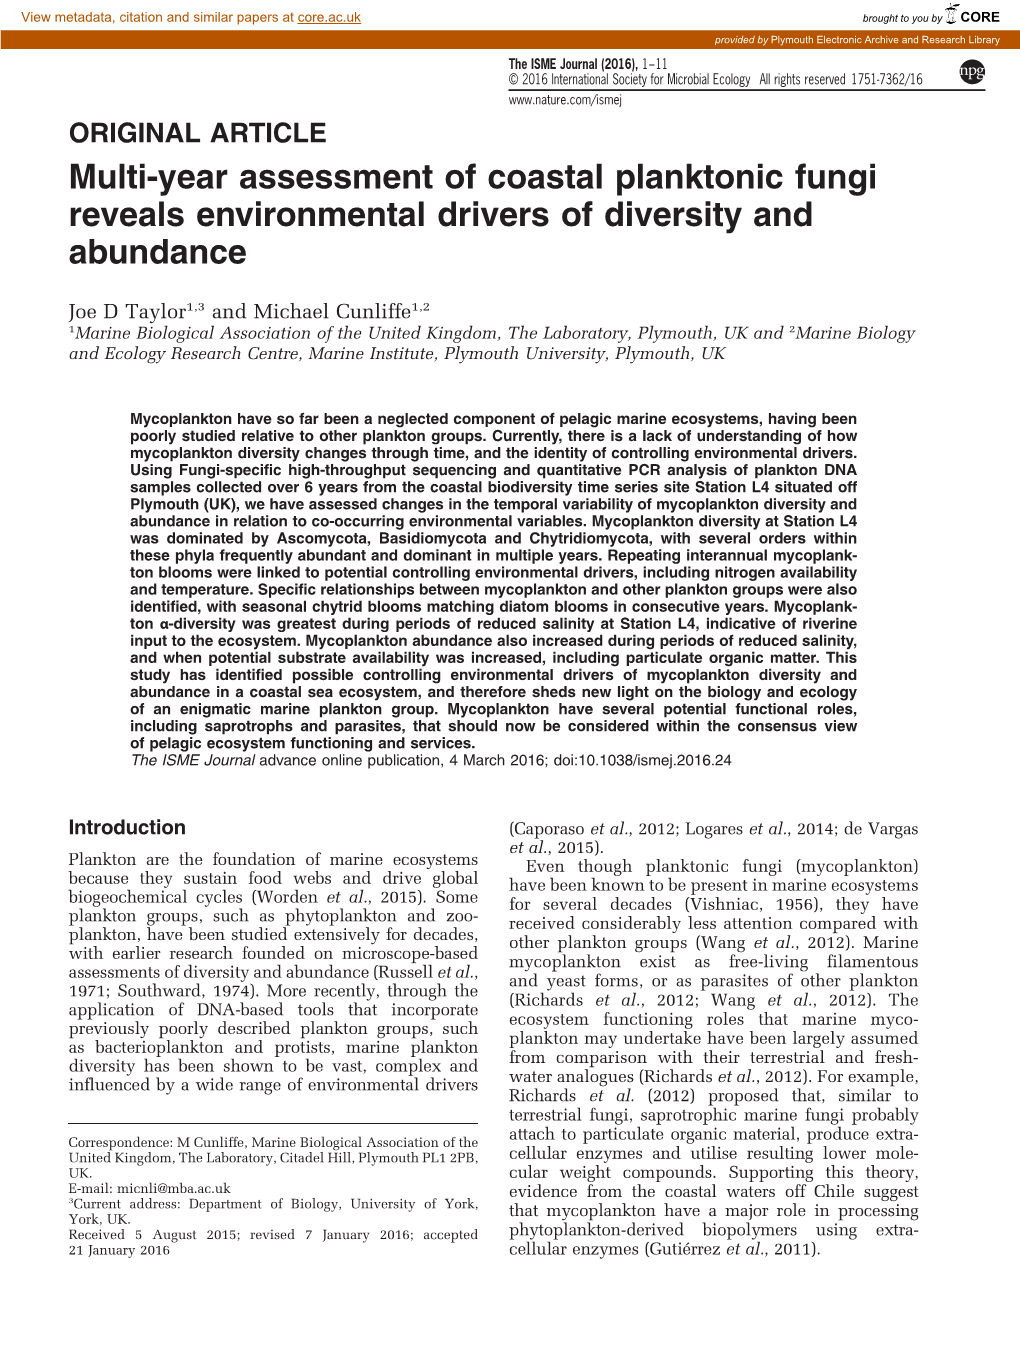 Multi-Year Assessment of Coastal Planktonic Fungi Reveals Environmental Drivers of Diversity and Abundance